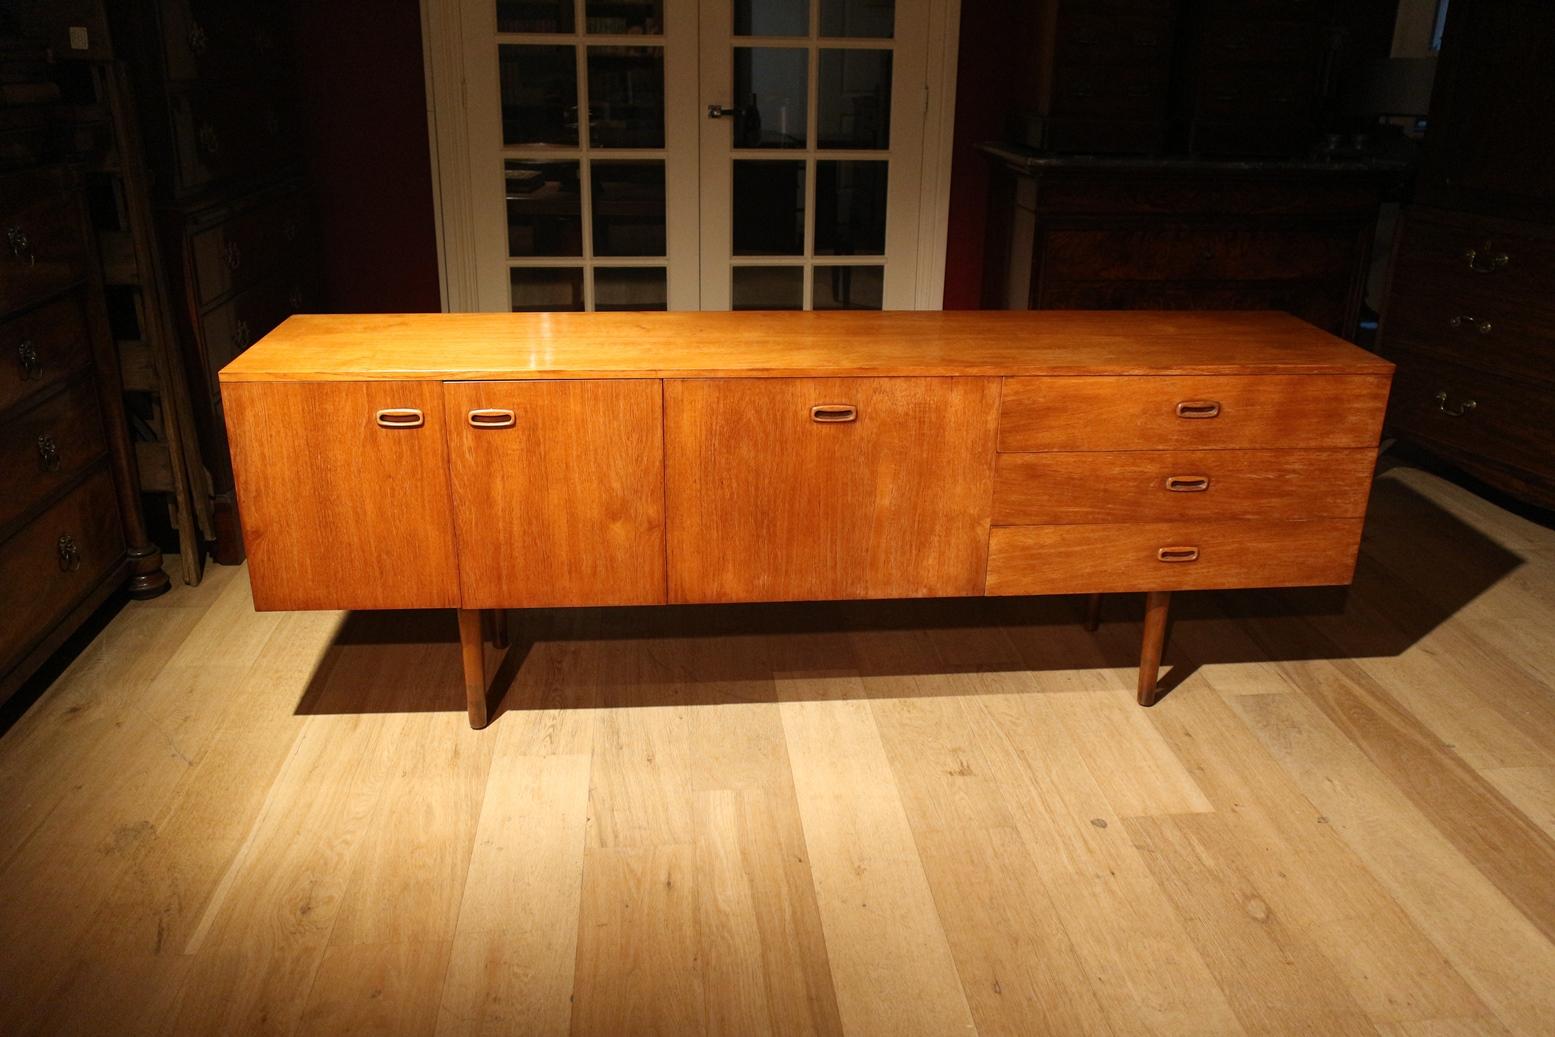 1960s sideboard in teak. In very good and original condition
Origin: Scandinavia
Period: 1960s
Size: 214cm x 46cm x h.75cm.